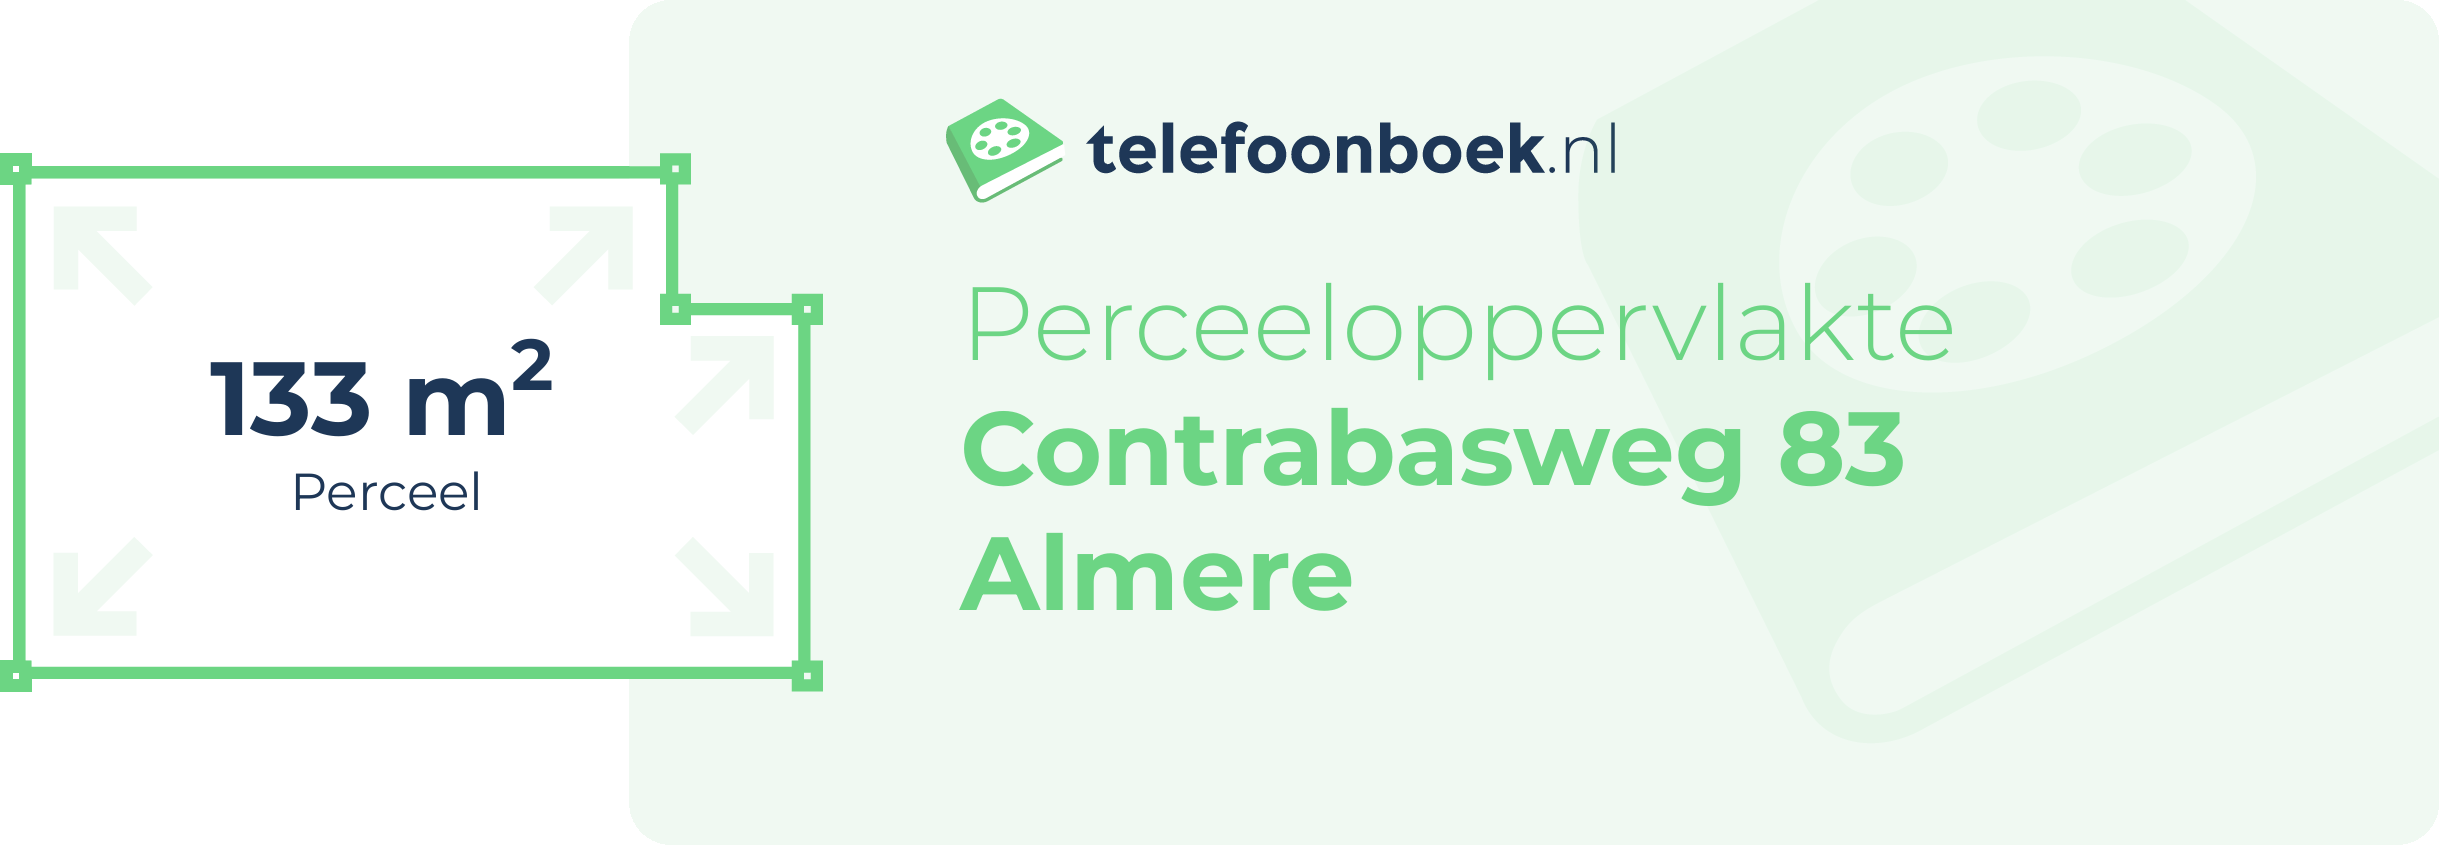 Perceeloppervlakte Contrabasweg 83 Almere